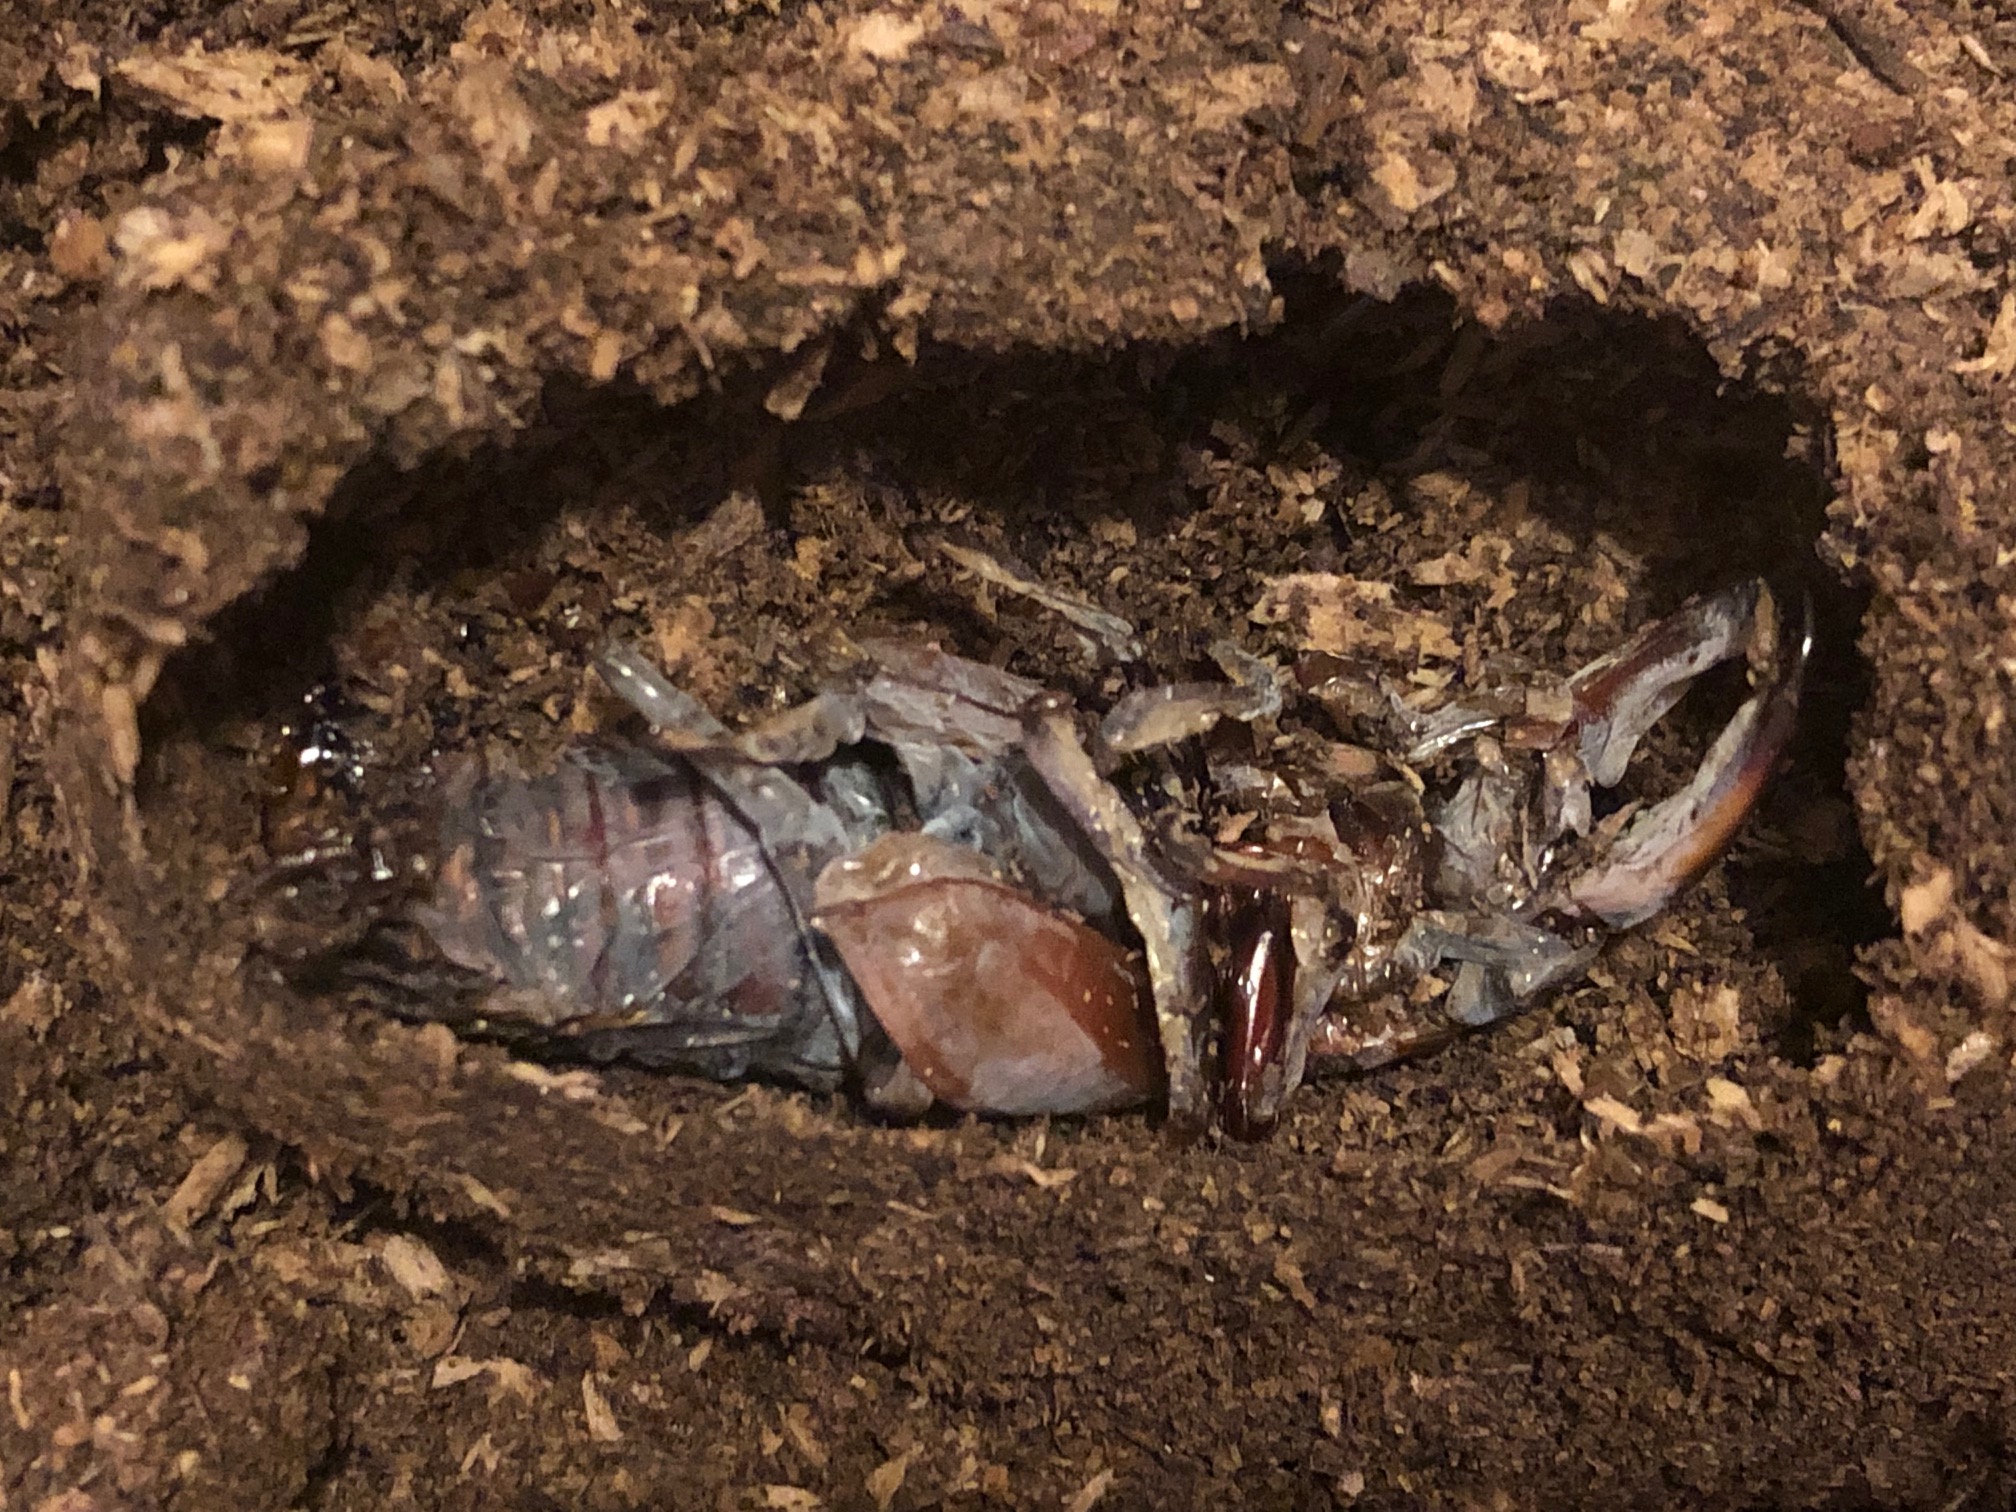 Hexarthrius davisoni male pupae died hatching